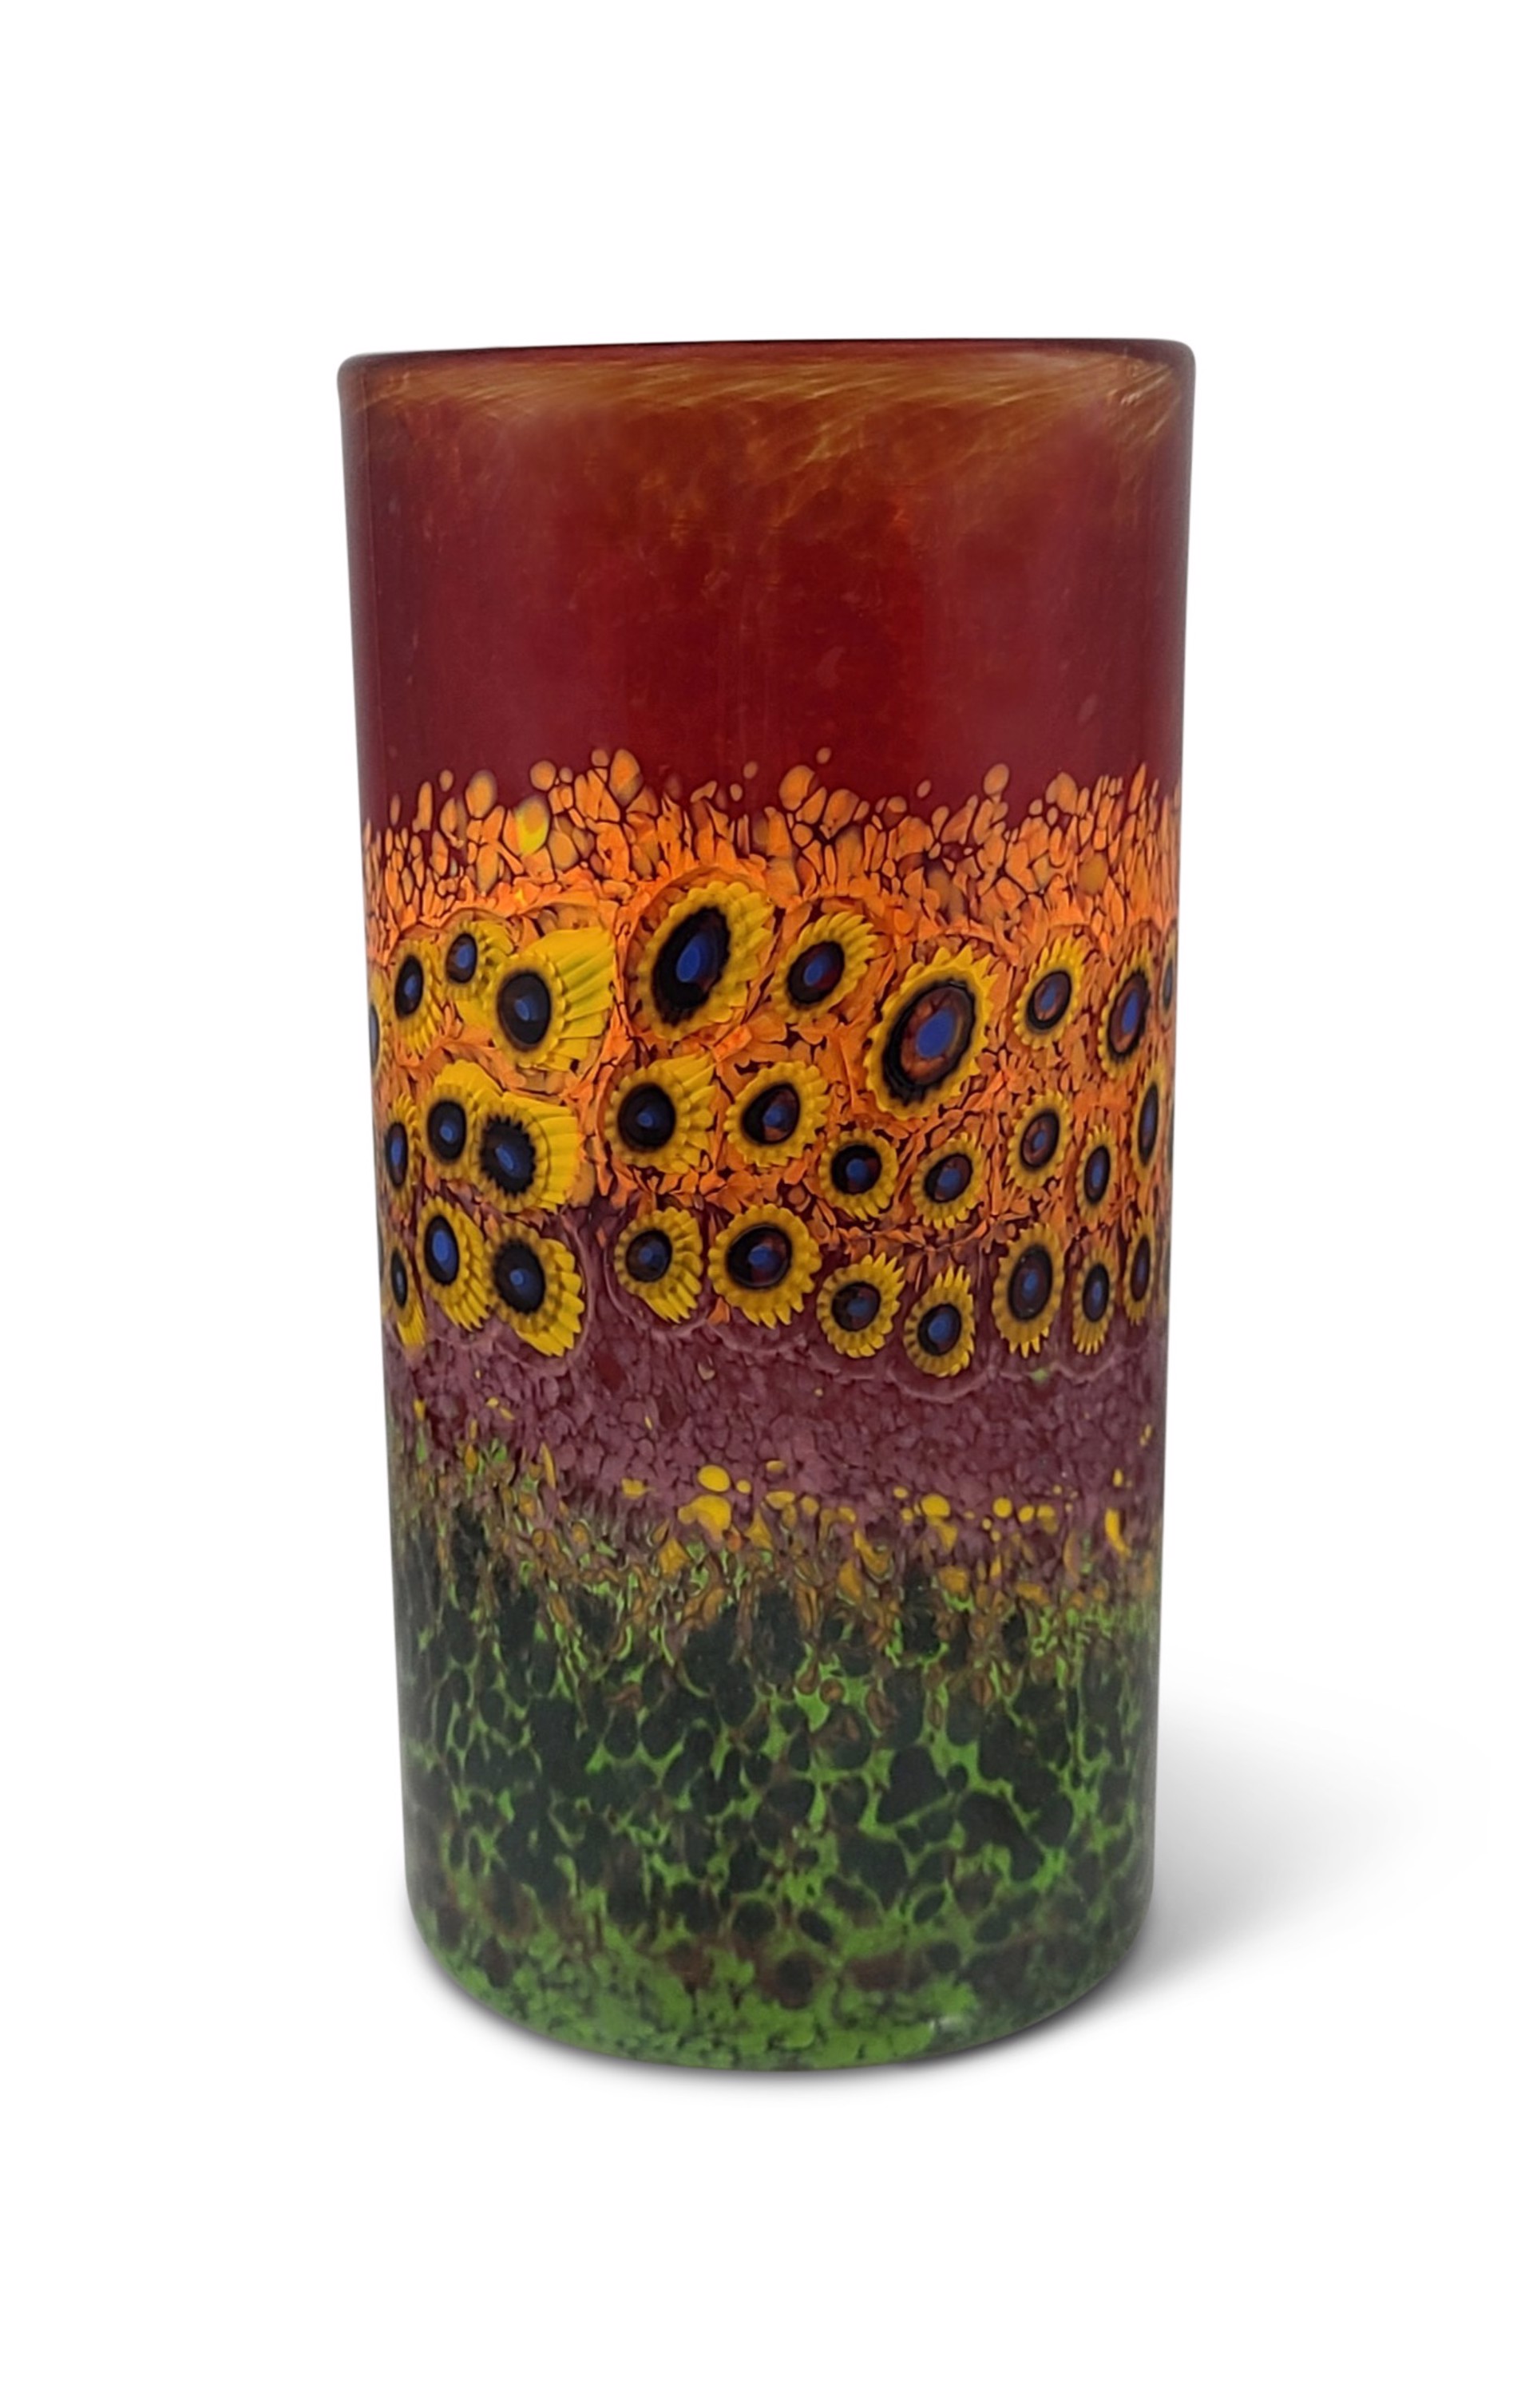 Cherry Tall Murrini Sunflower Tumbler by Ken Hanson & Ingrid Hanson